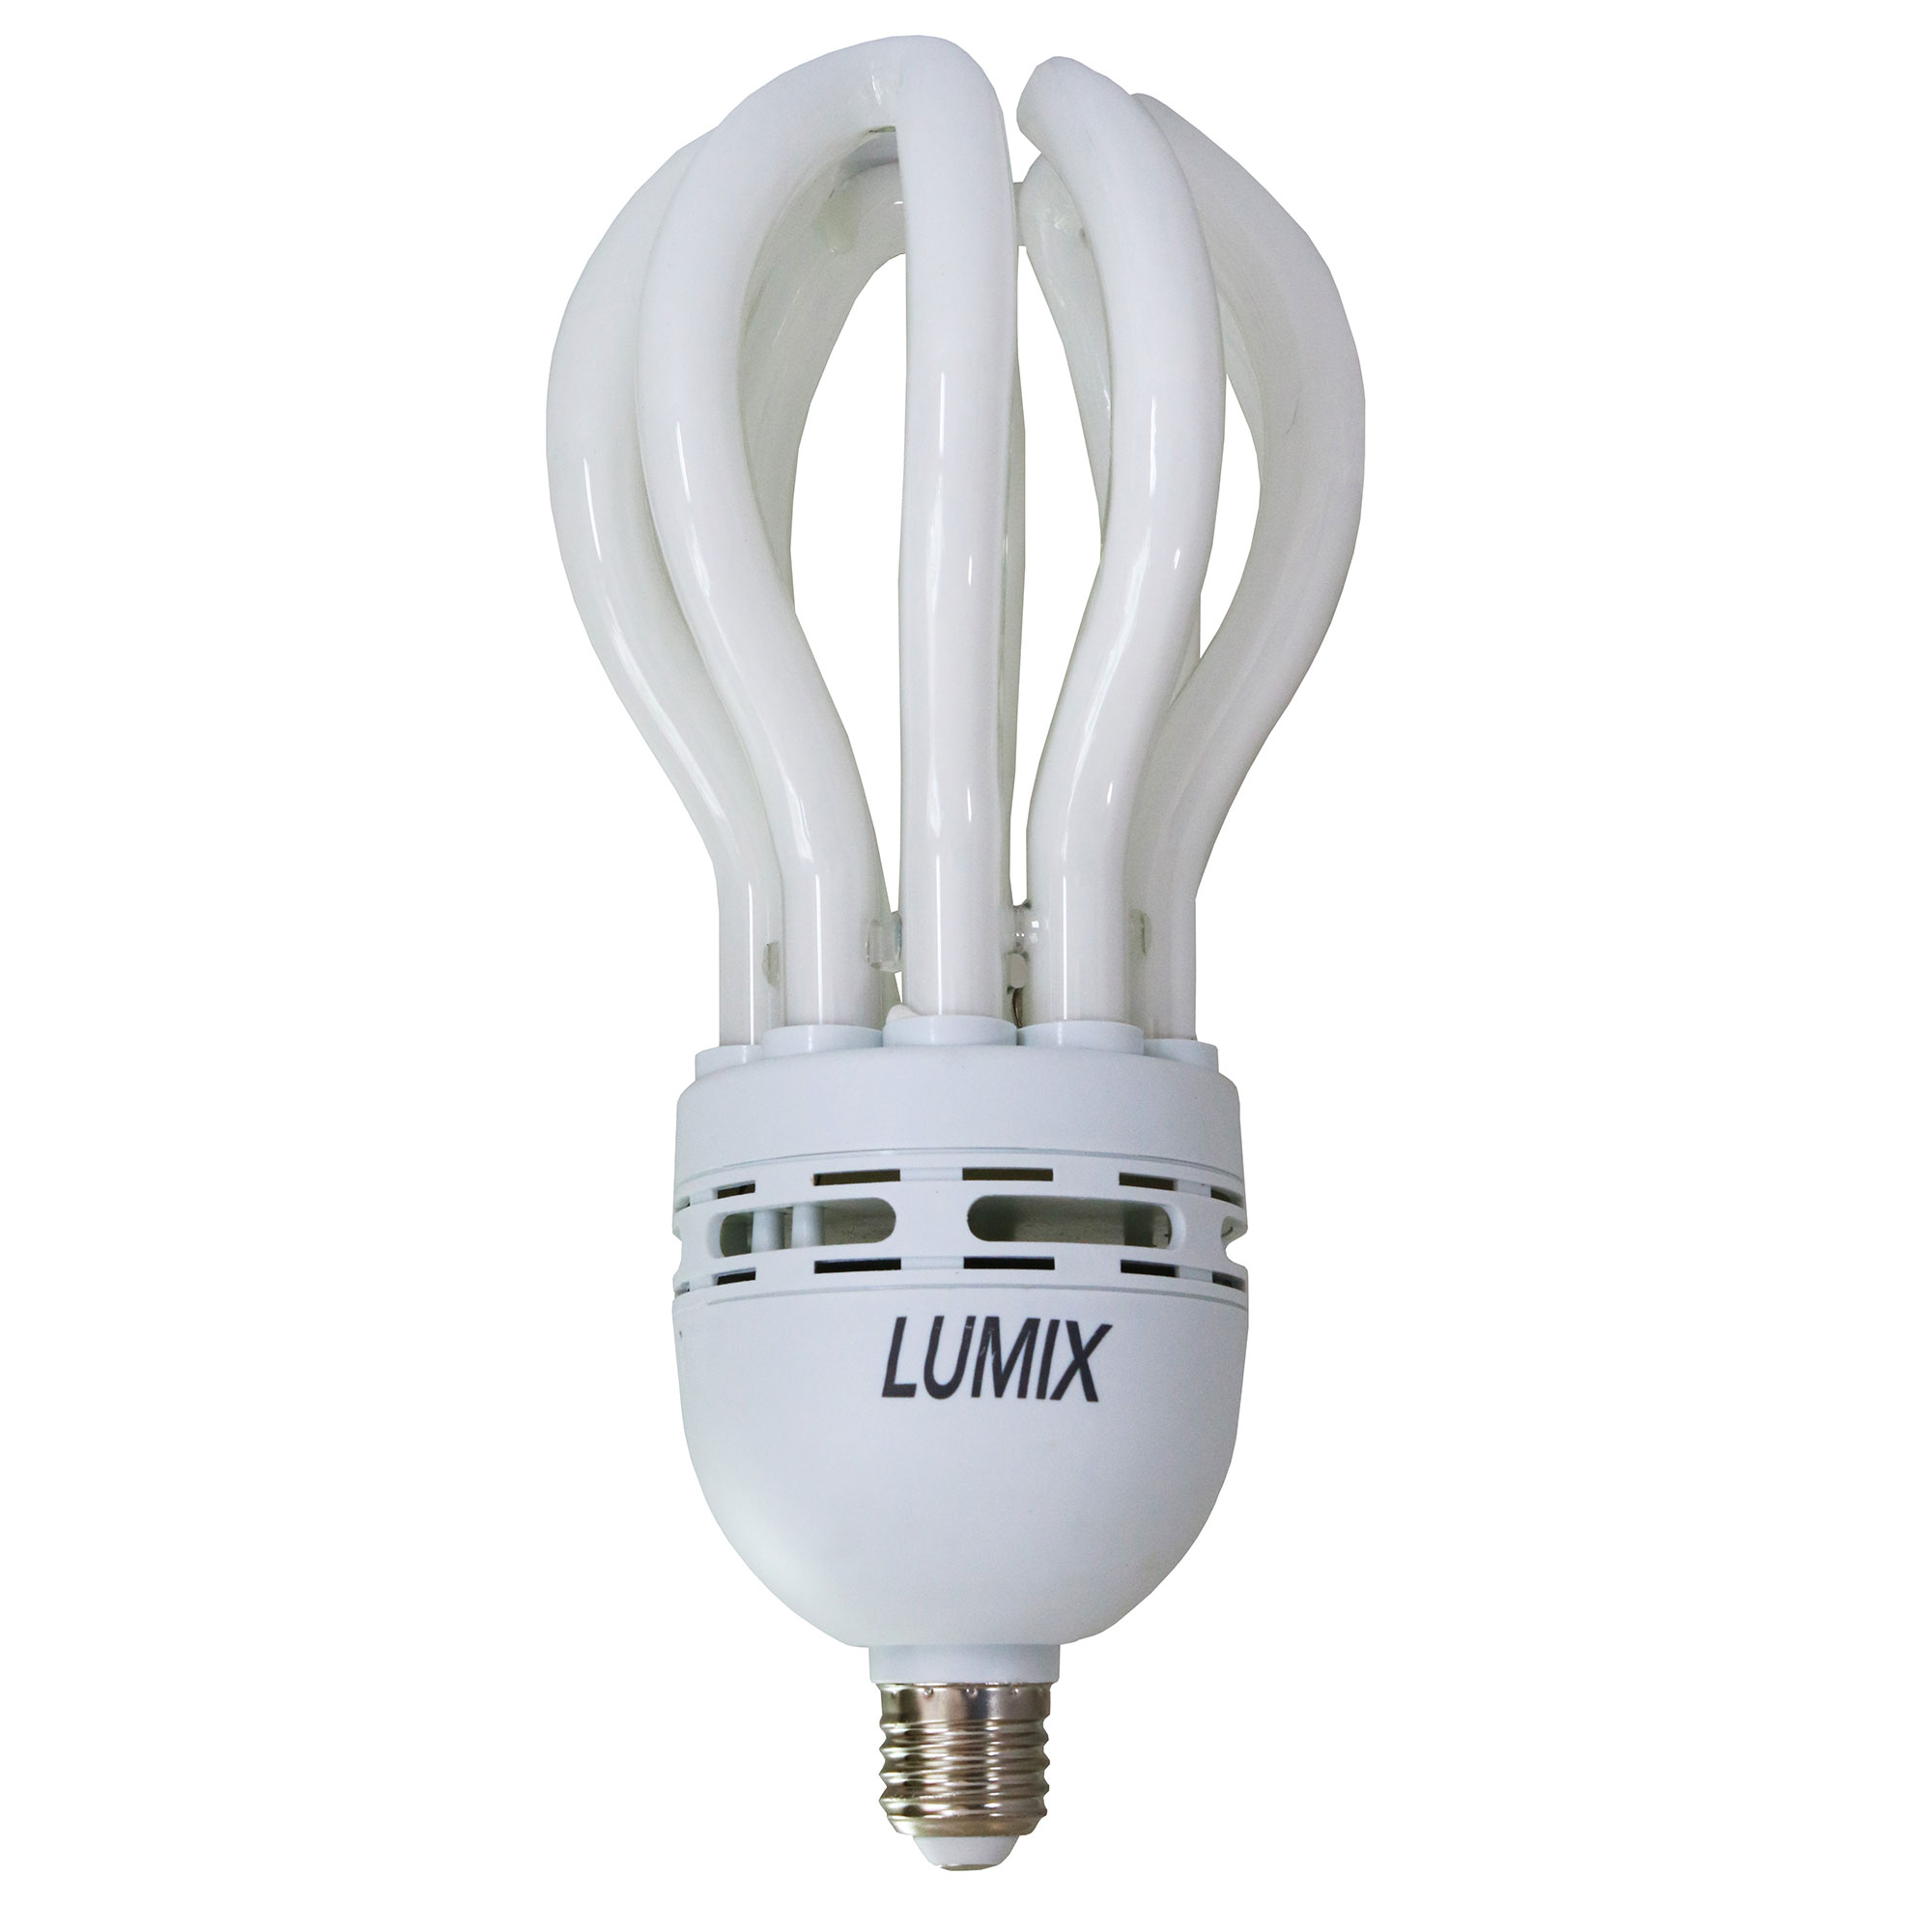 لامپ کم مصرف 105 وات لومیکس کد SKI21 پایه E27